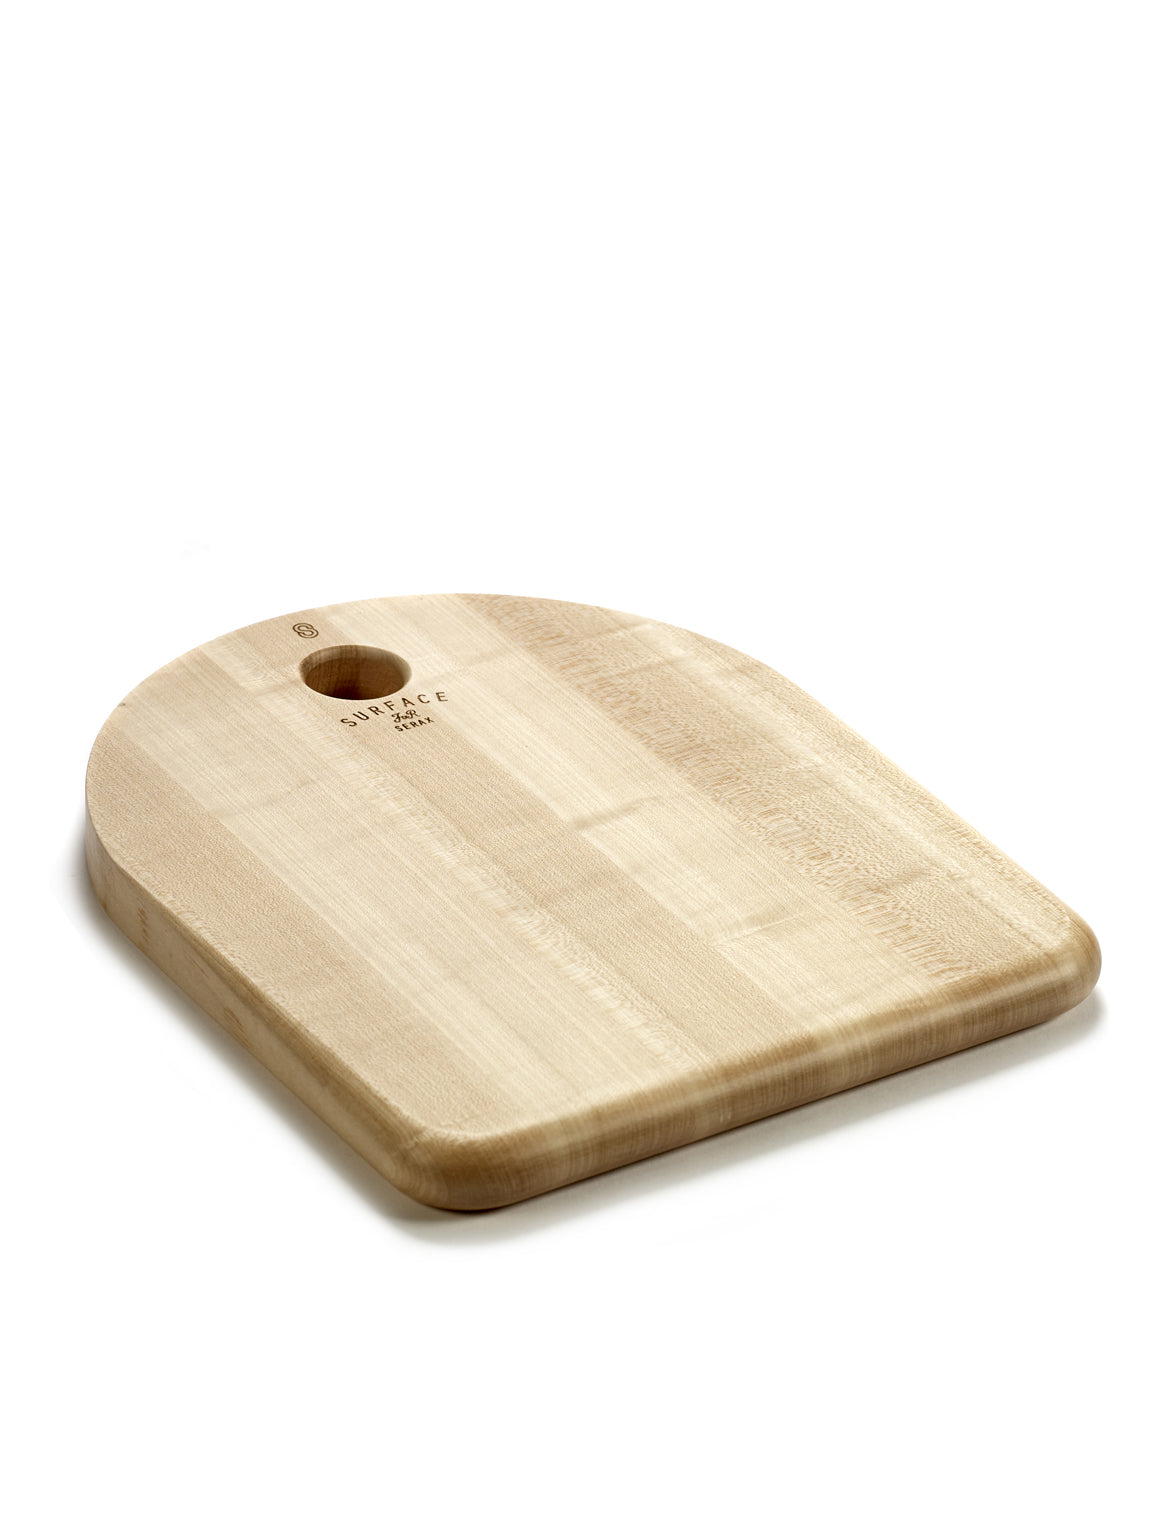 SURFACE - Contour cutting board (S)